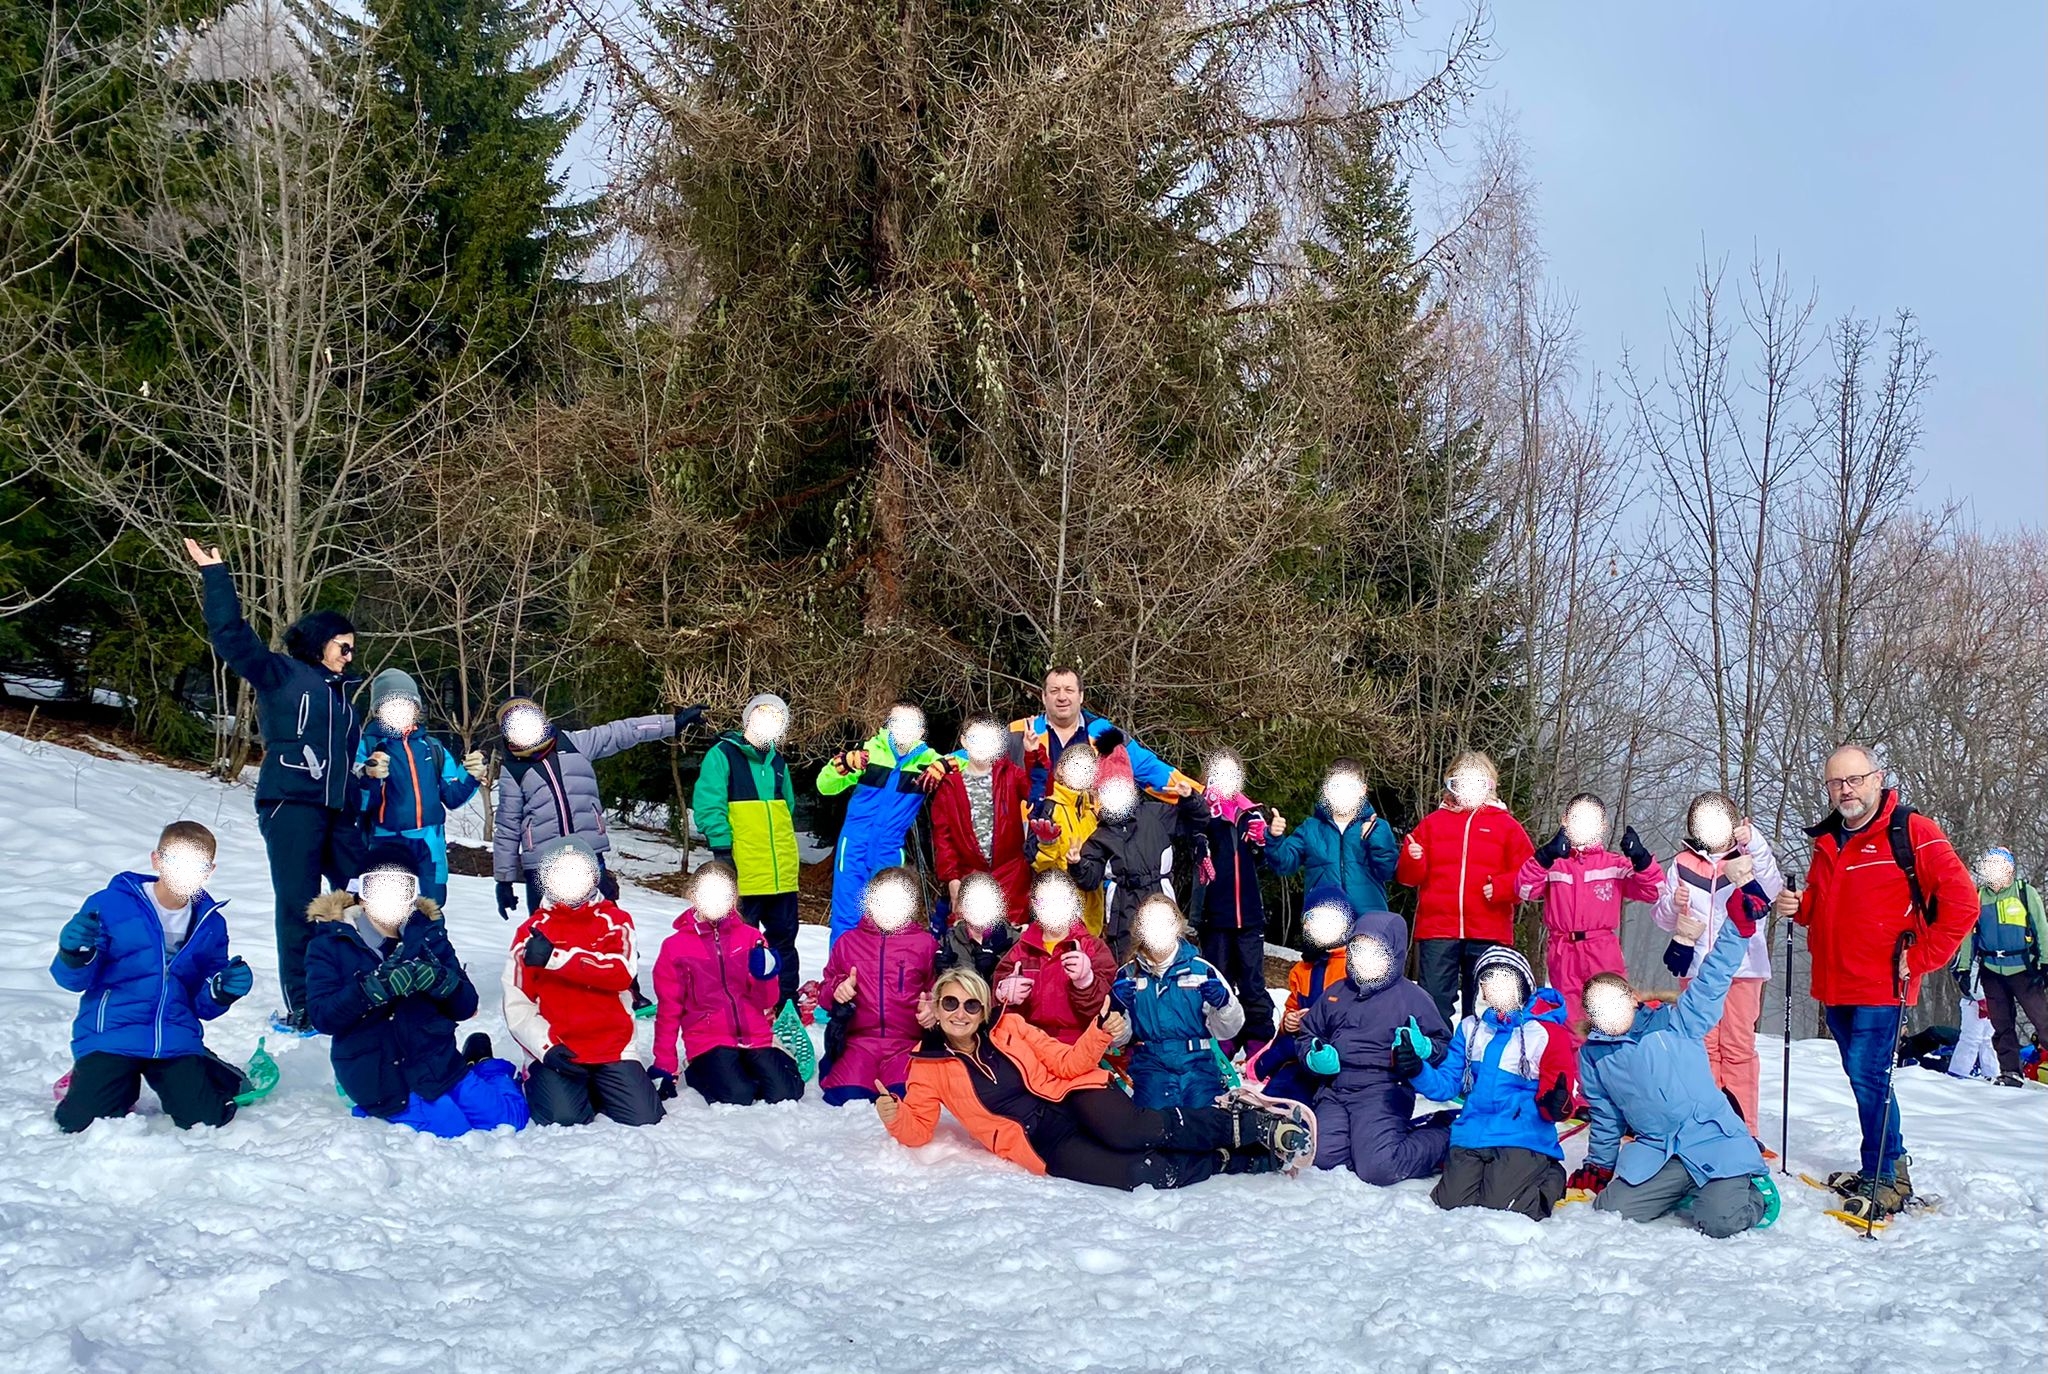 You are currently viewing Classe de neige à Valmeigner (les photos)